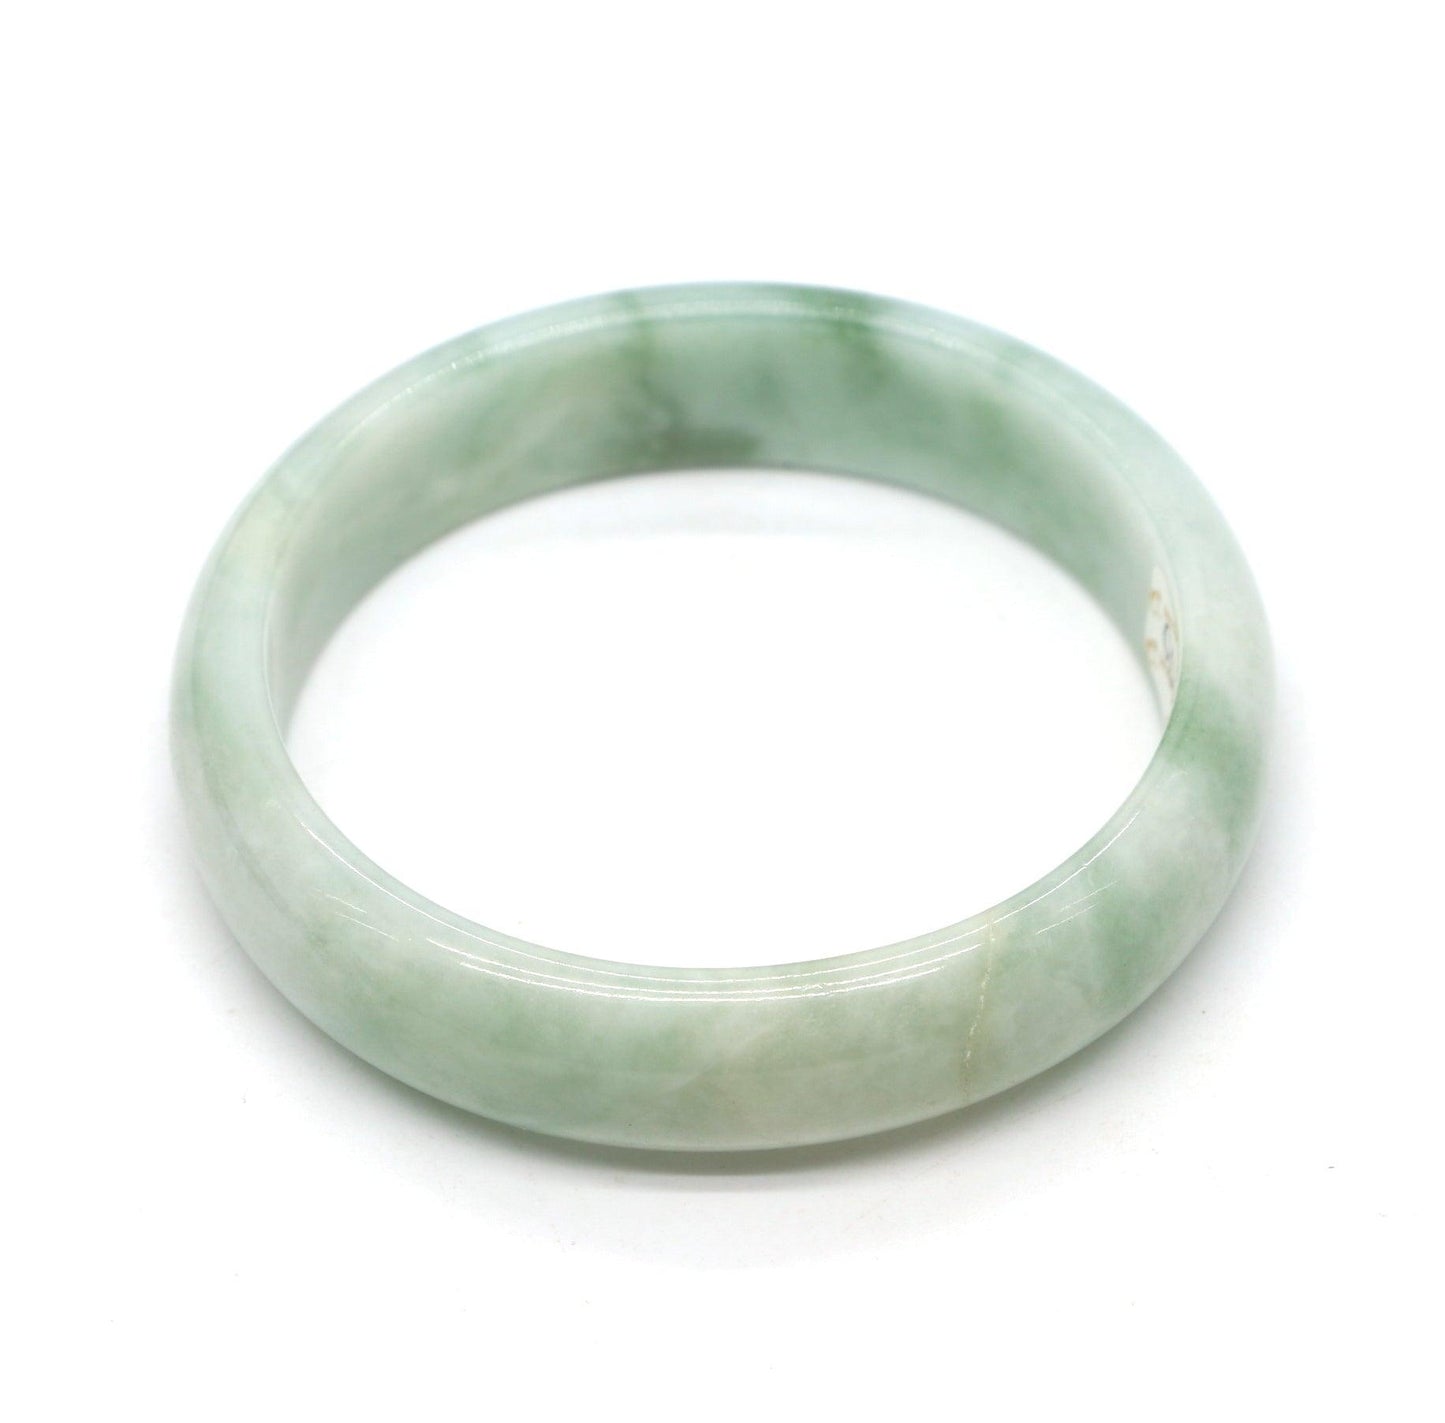 Type A Certified Jadeite Jade Bangle Size 54 -56mm B0BN7FJGV4 - Jade-collector.com